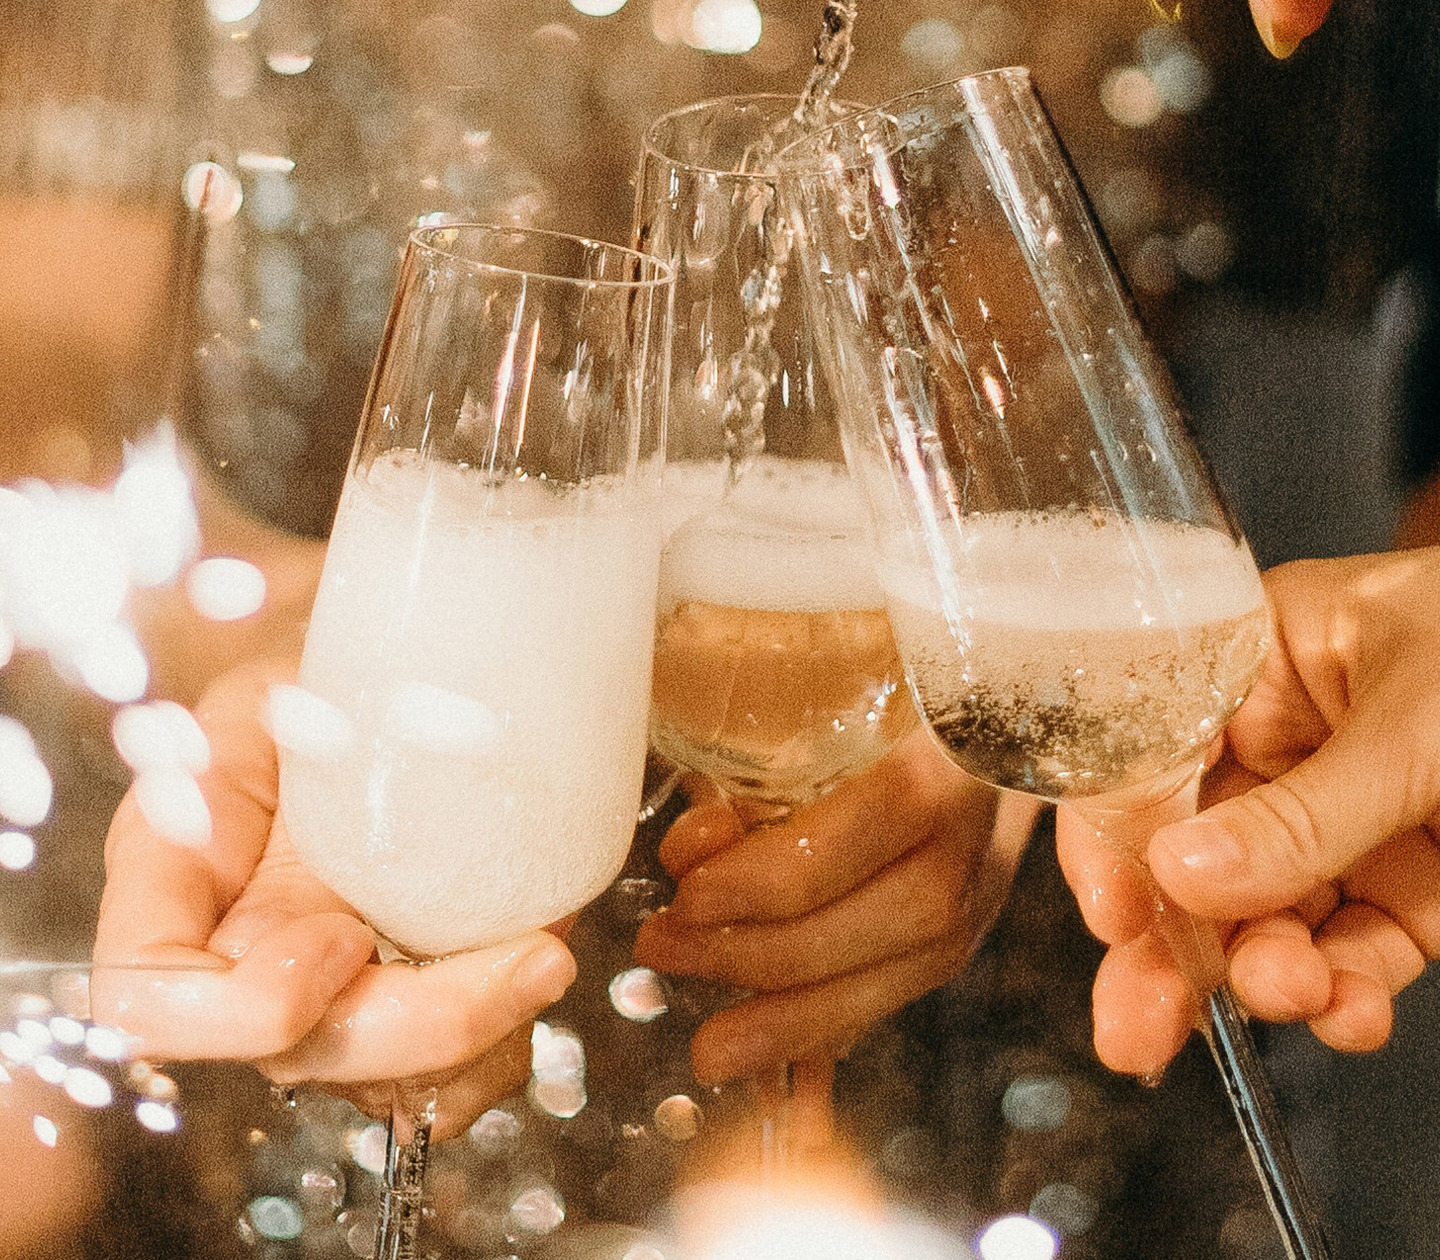 Champagne glasses in a festive setting